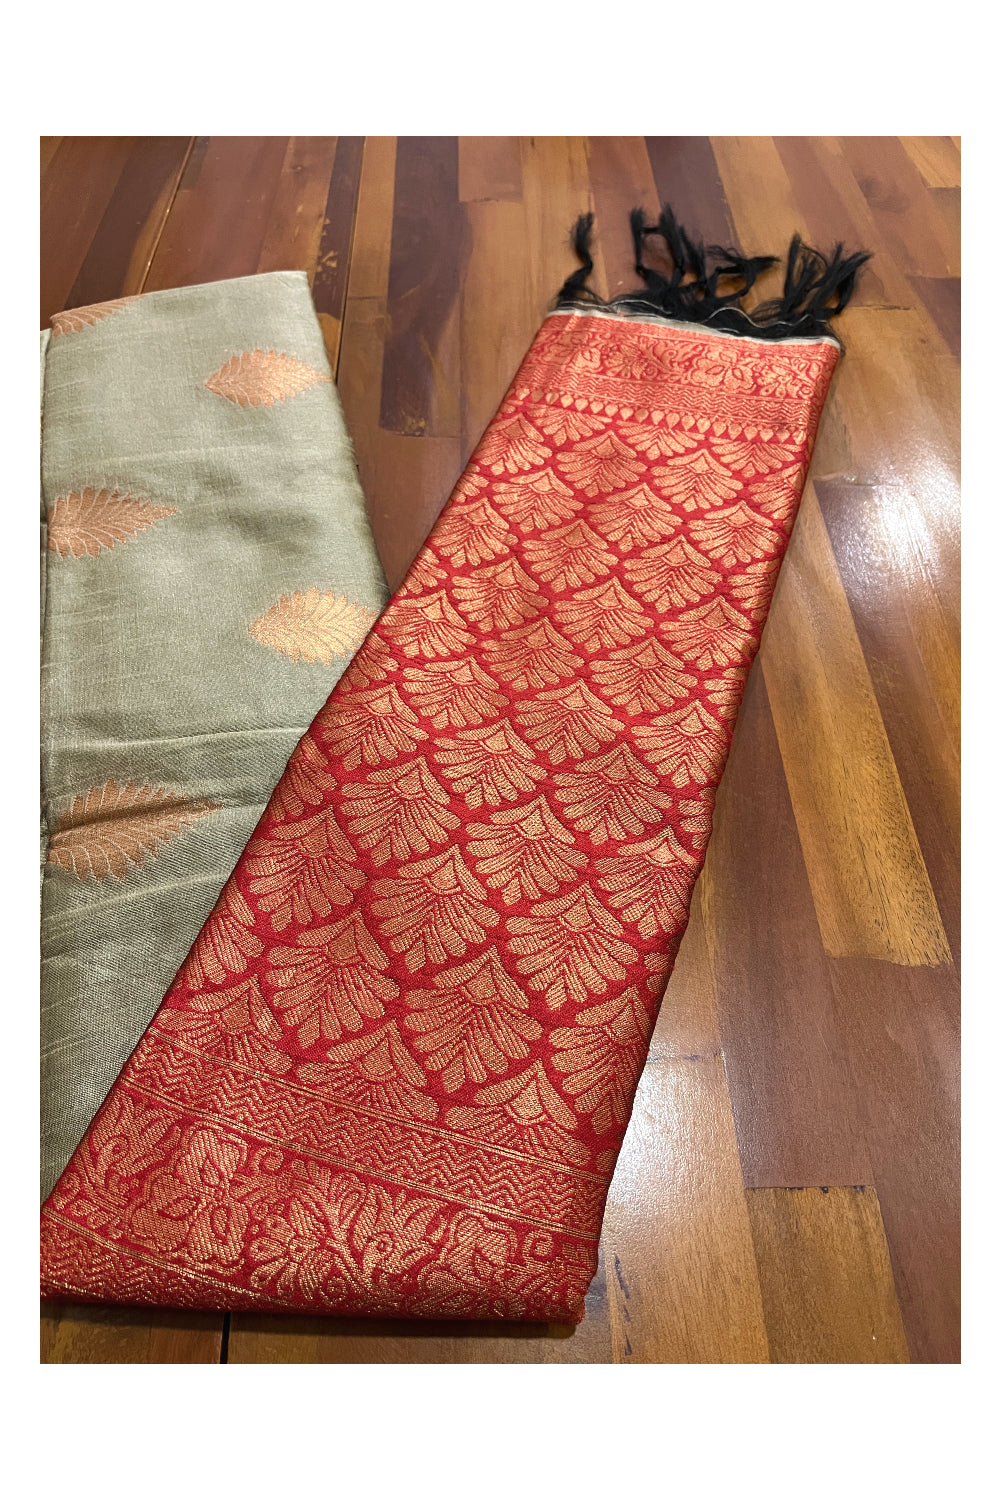 Southloom Cotton Silk Grey Designer Saree with Kasavu Woven Works on Pallu